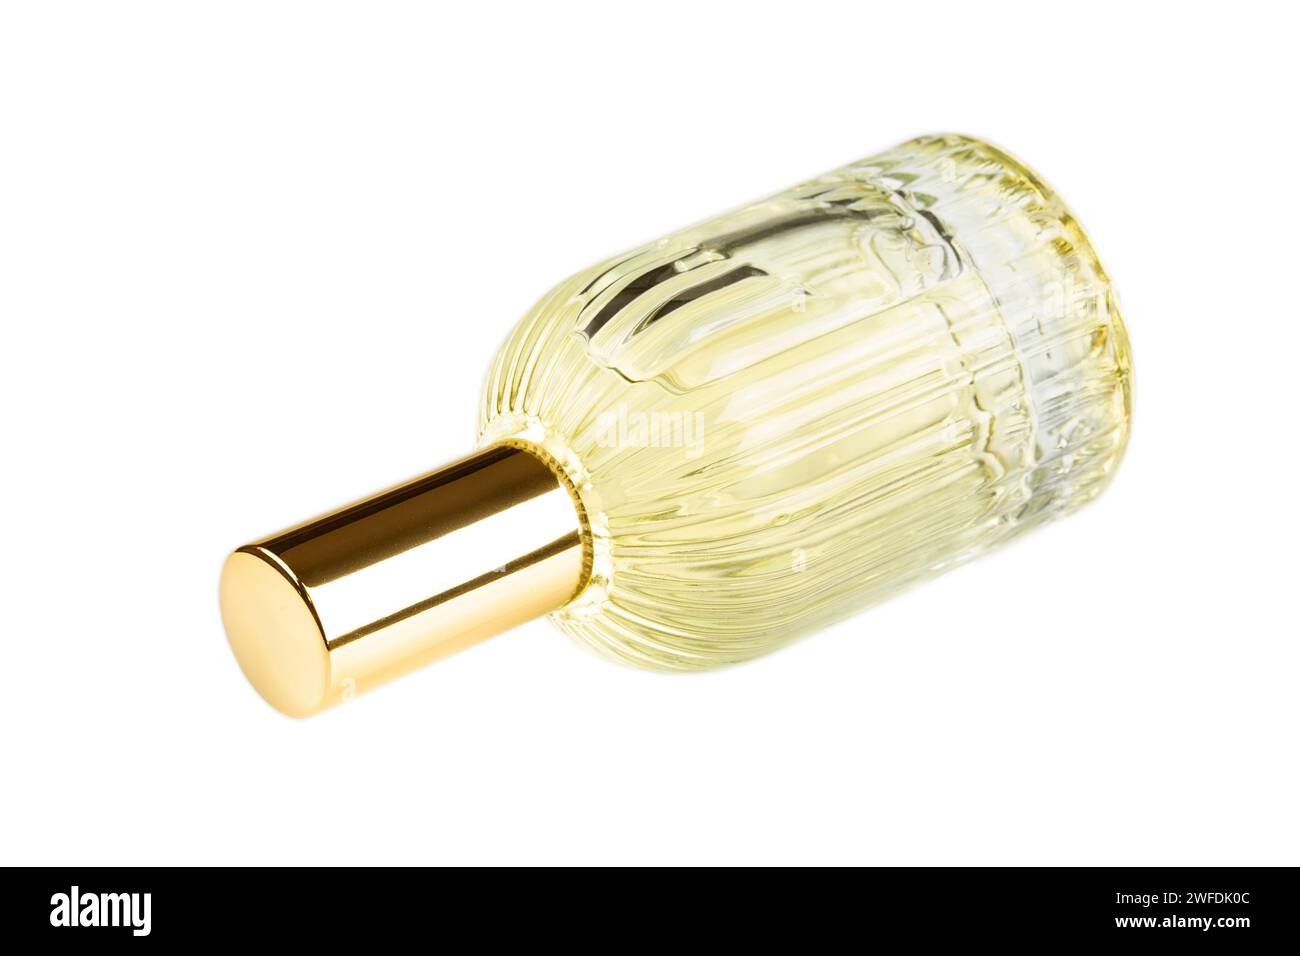 Frasco de perfume aislado sobre fondo blanco. Foto de stock